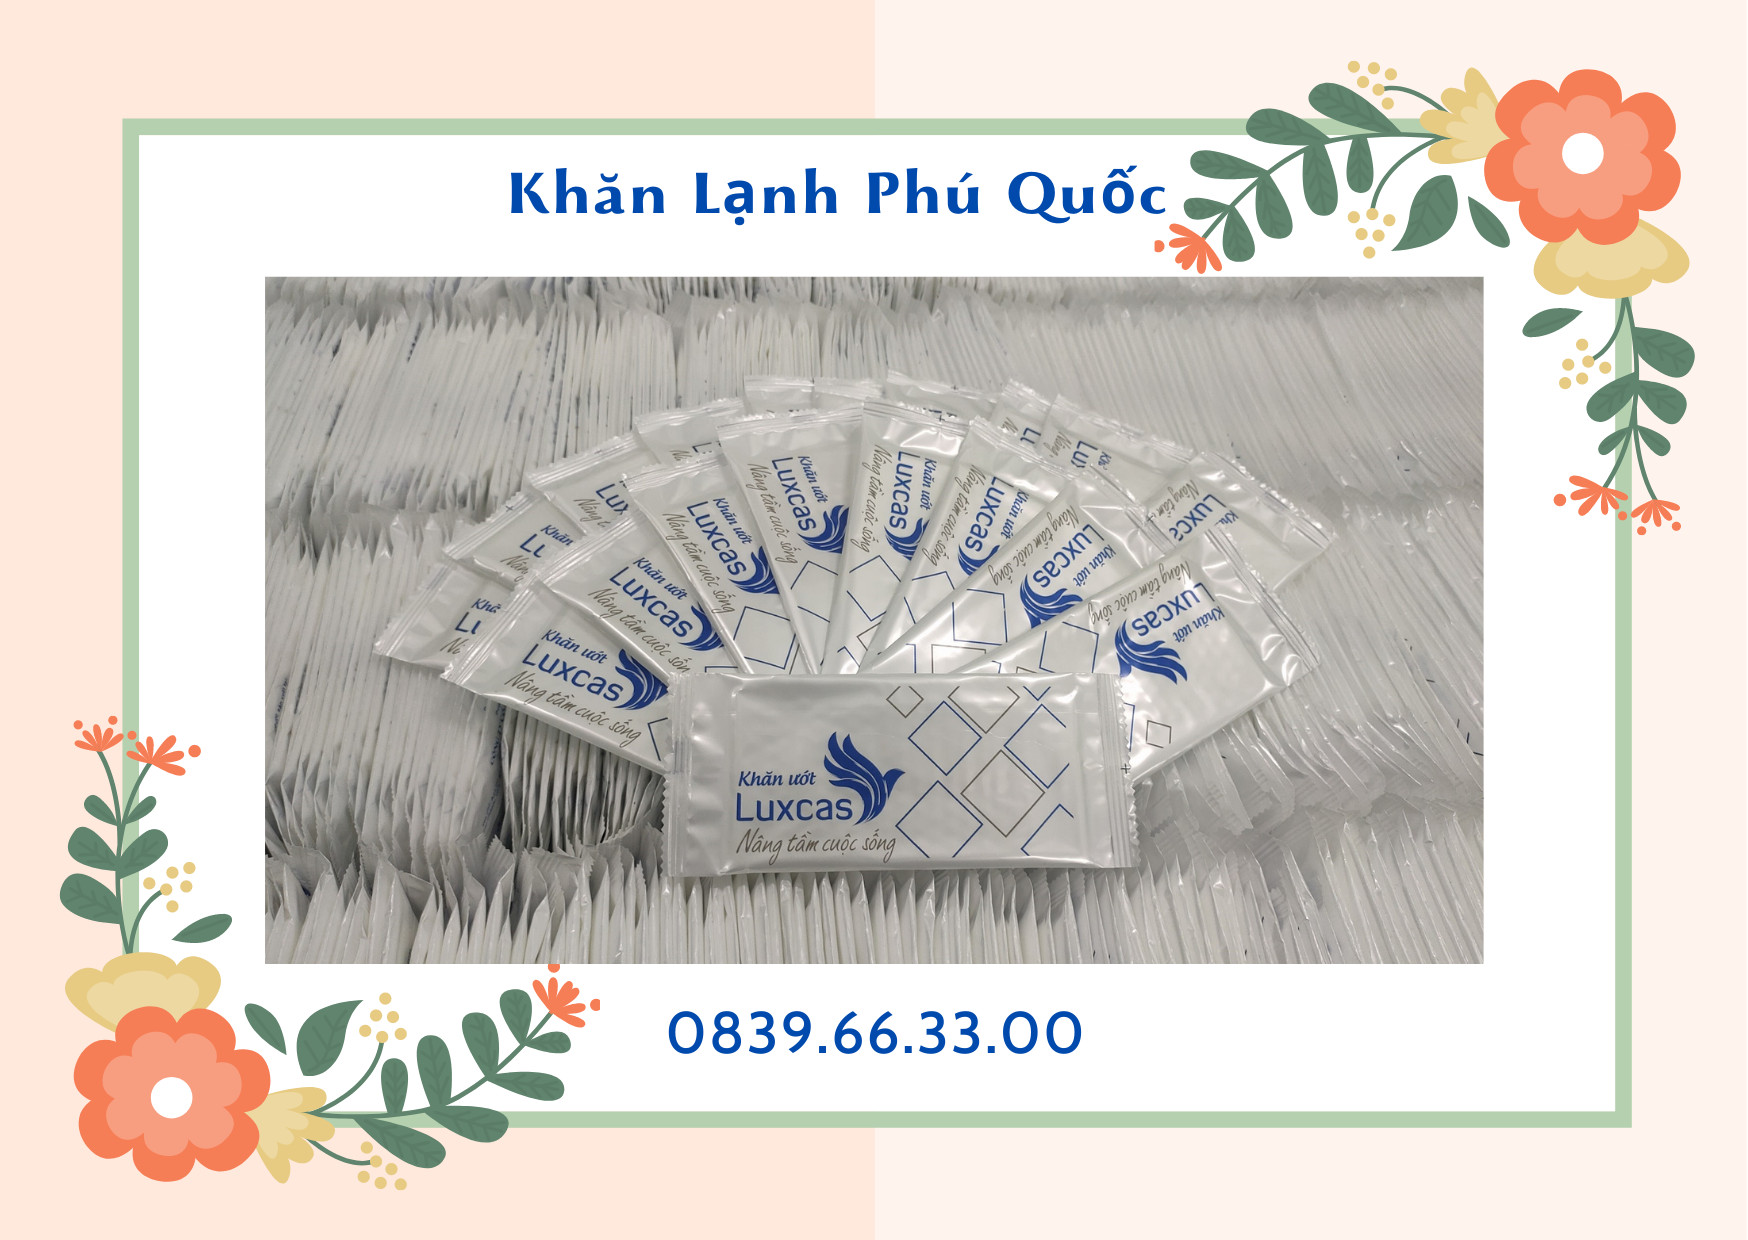 lam-khan-lanh-phu-quoc-5